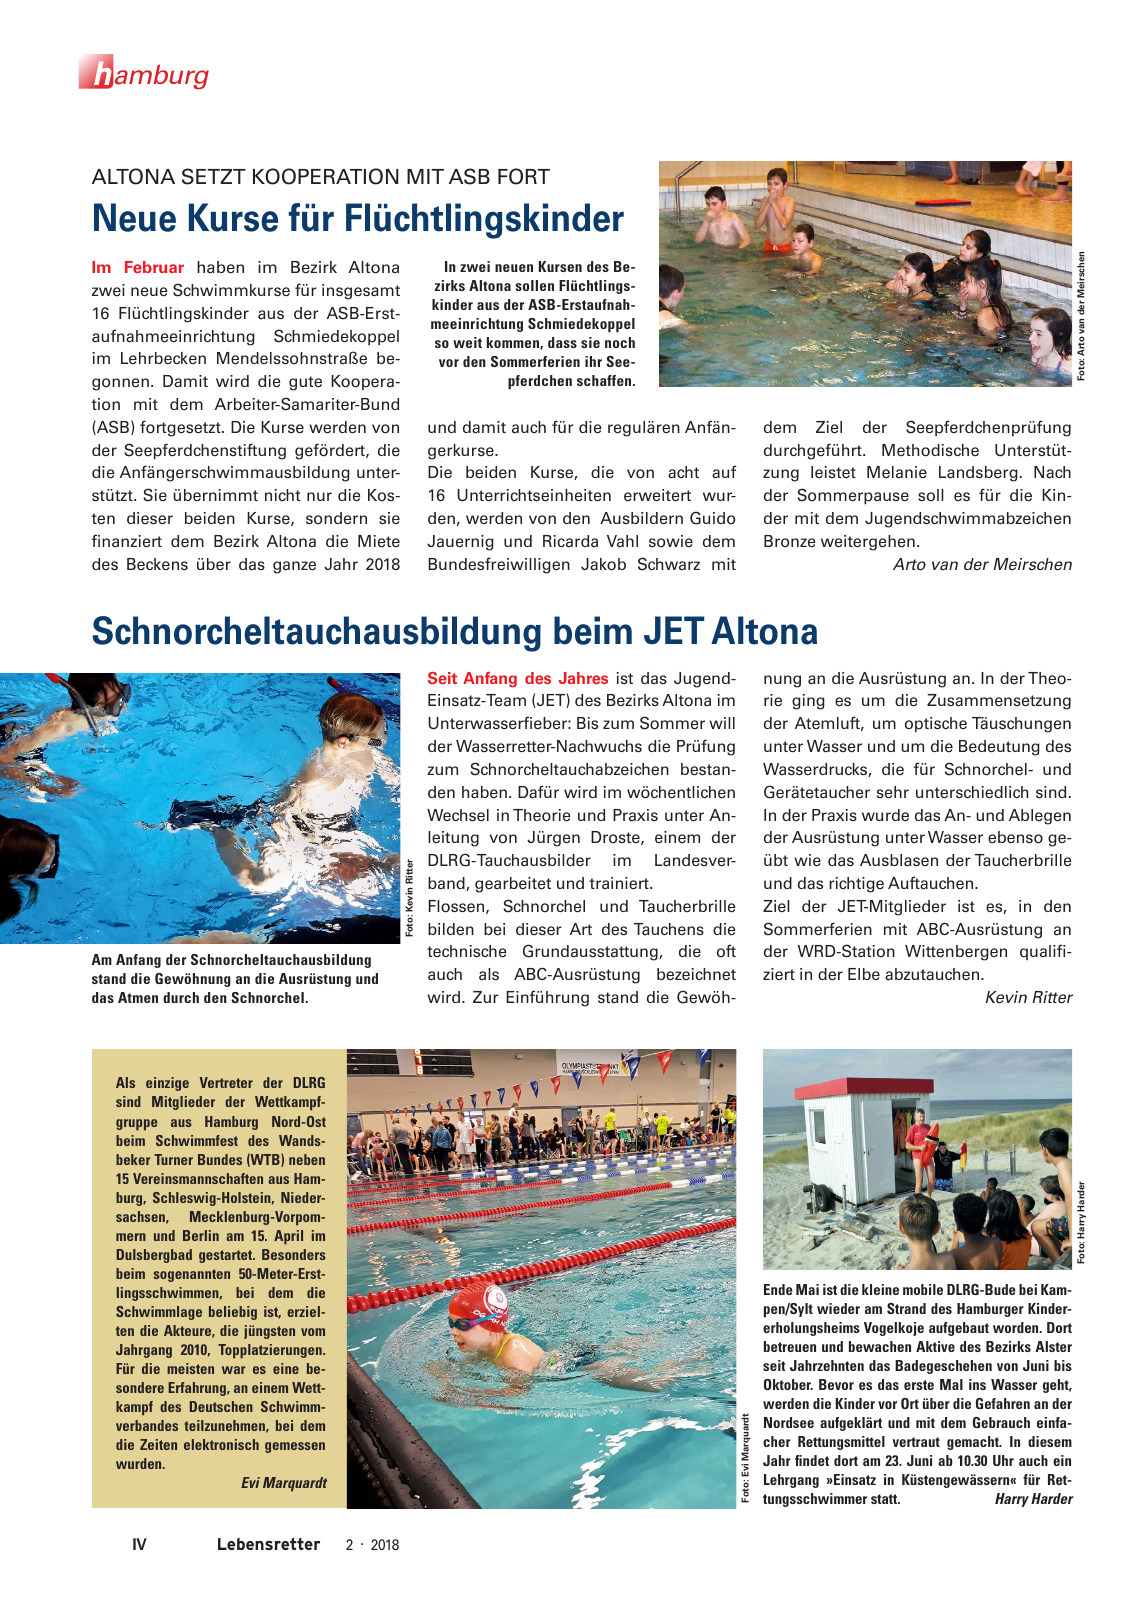 Vorschau Lebensretter 2/2018 - Regionalausgabe Hamburg Seite 6